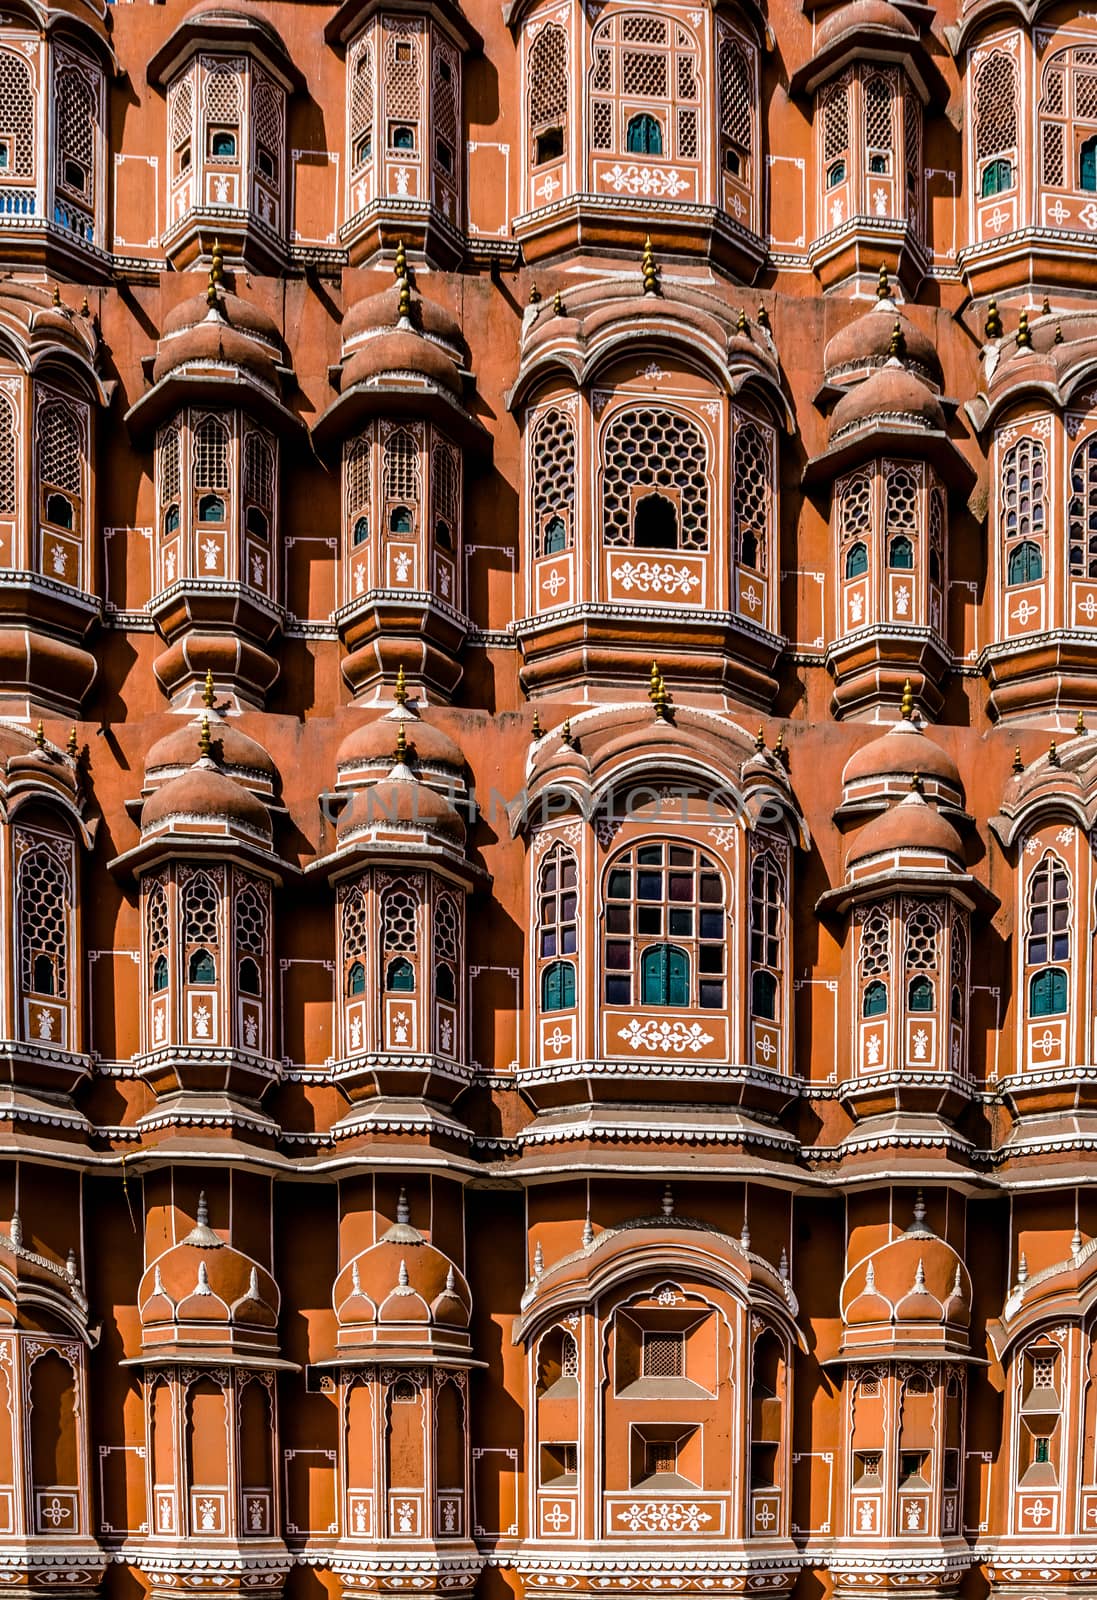 Close-up image of unique Hawa Mahal structure in Jaipur, India.